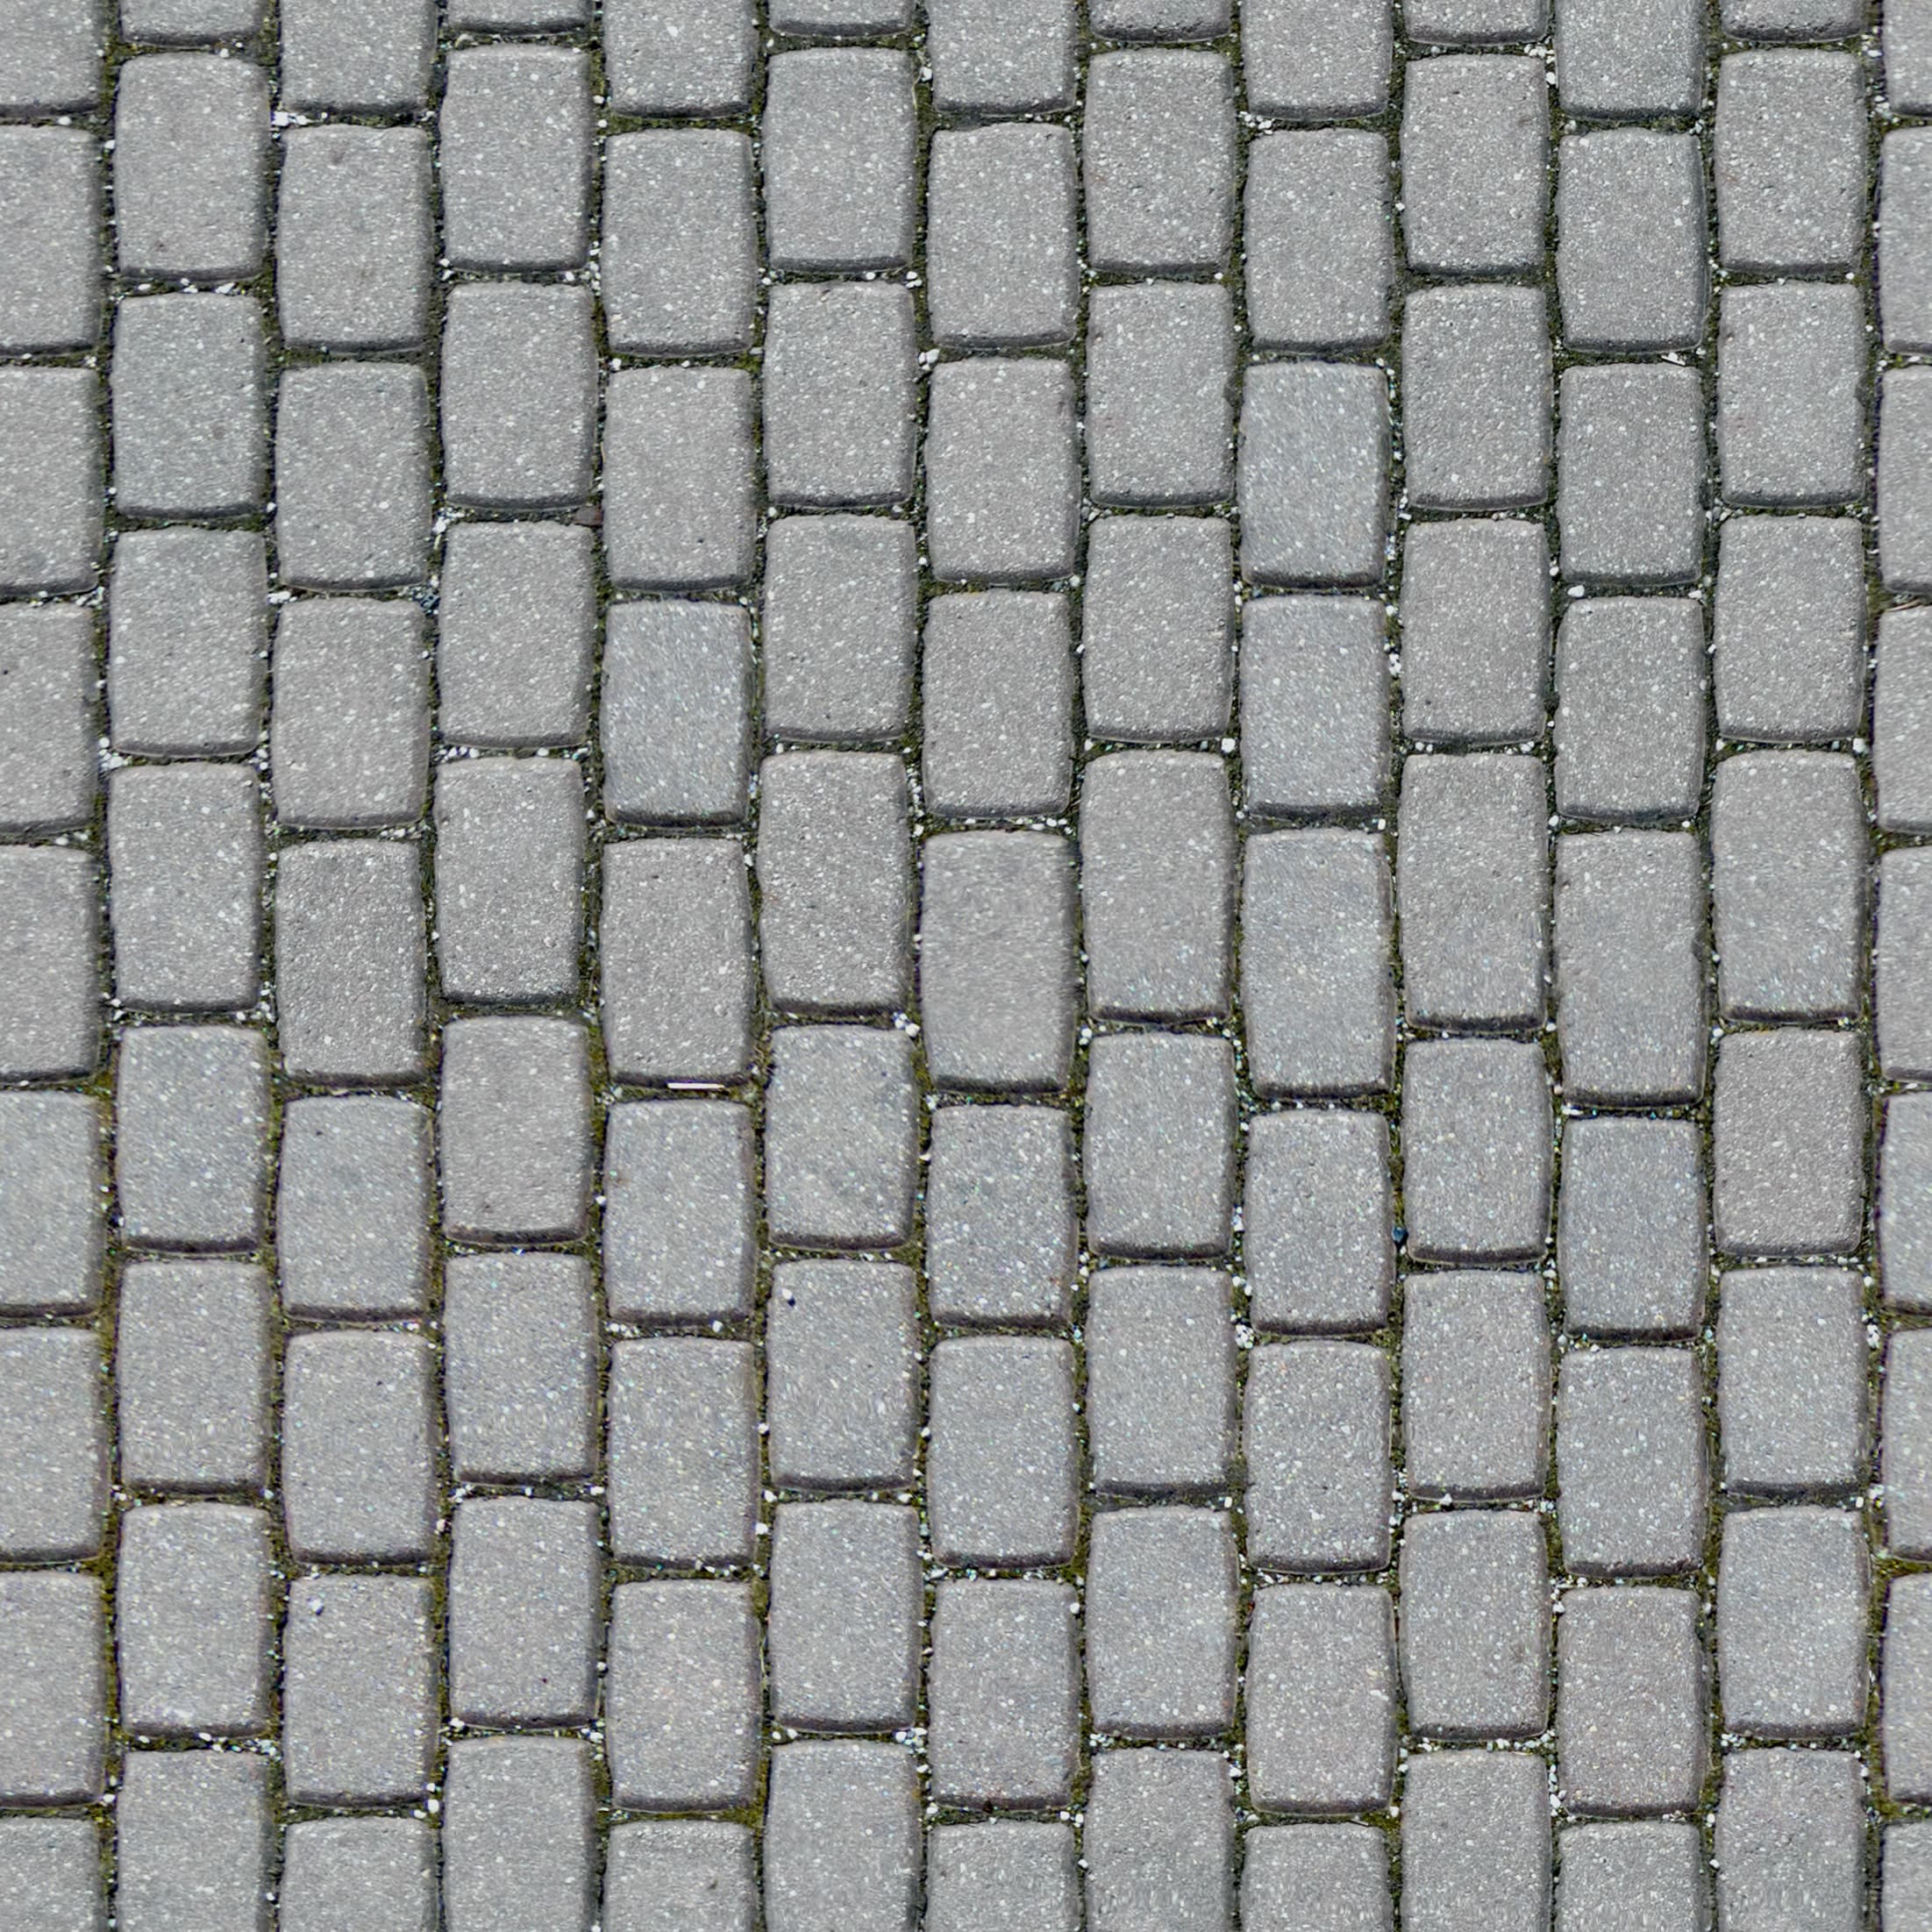 Rectangular Concrete Brick Pavement With Grass Free Seamless Textures